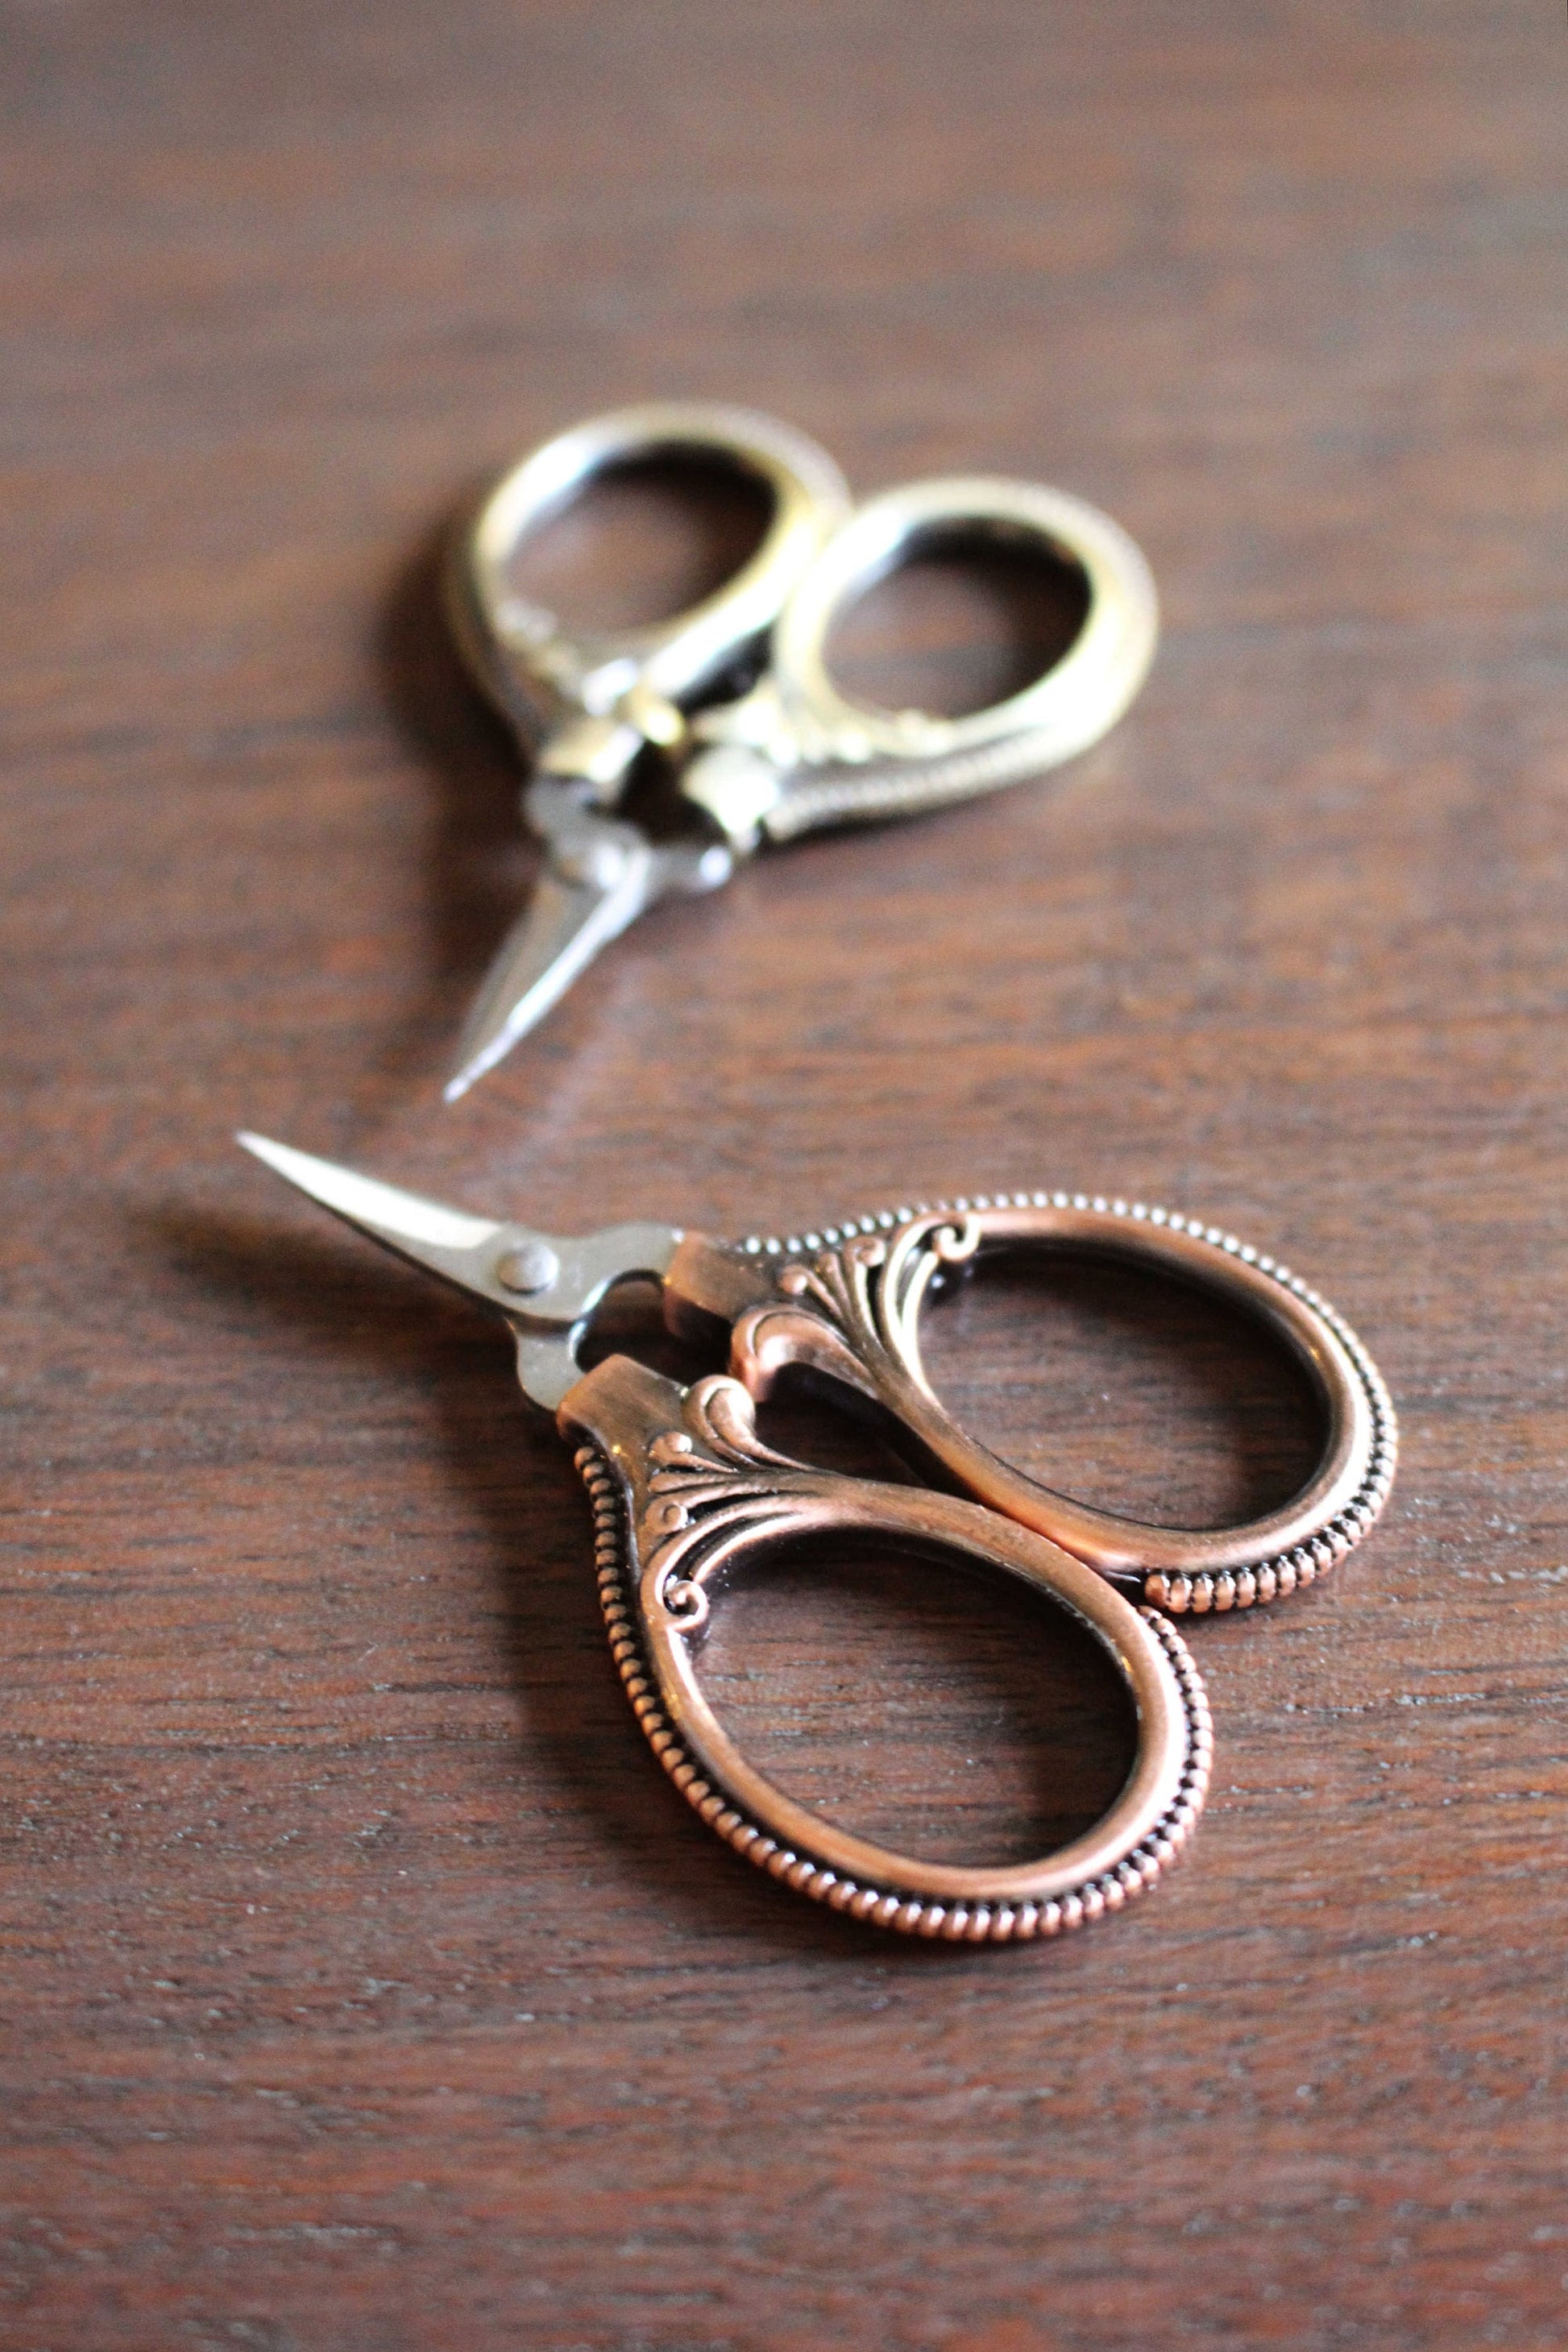 The Knitting Barber Mini Embroidery Scissors | Pequena tesoura de bordar